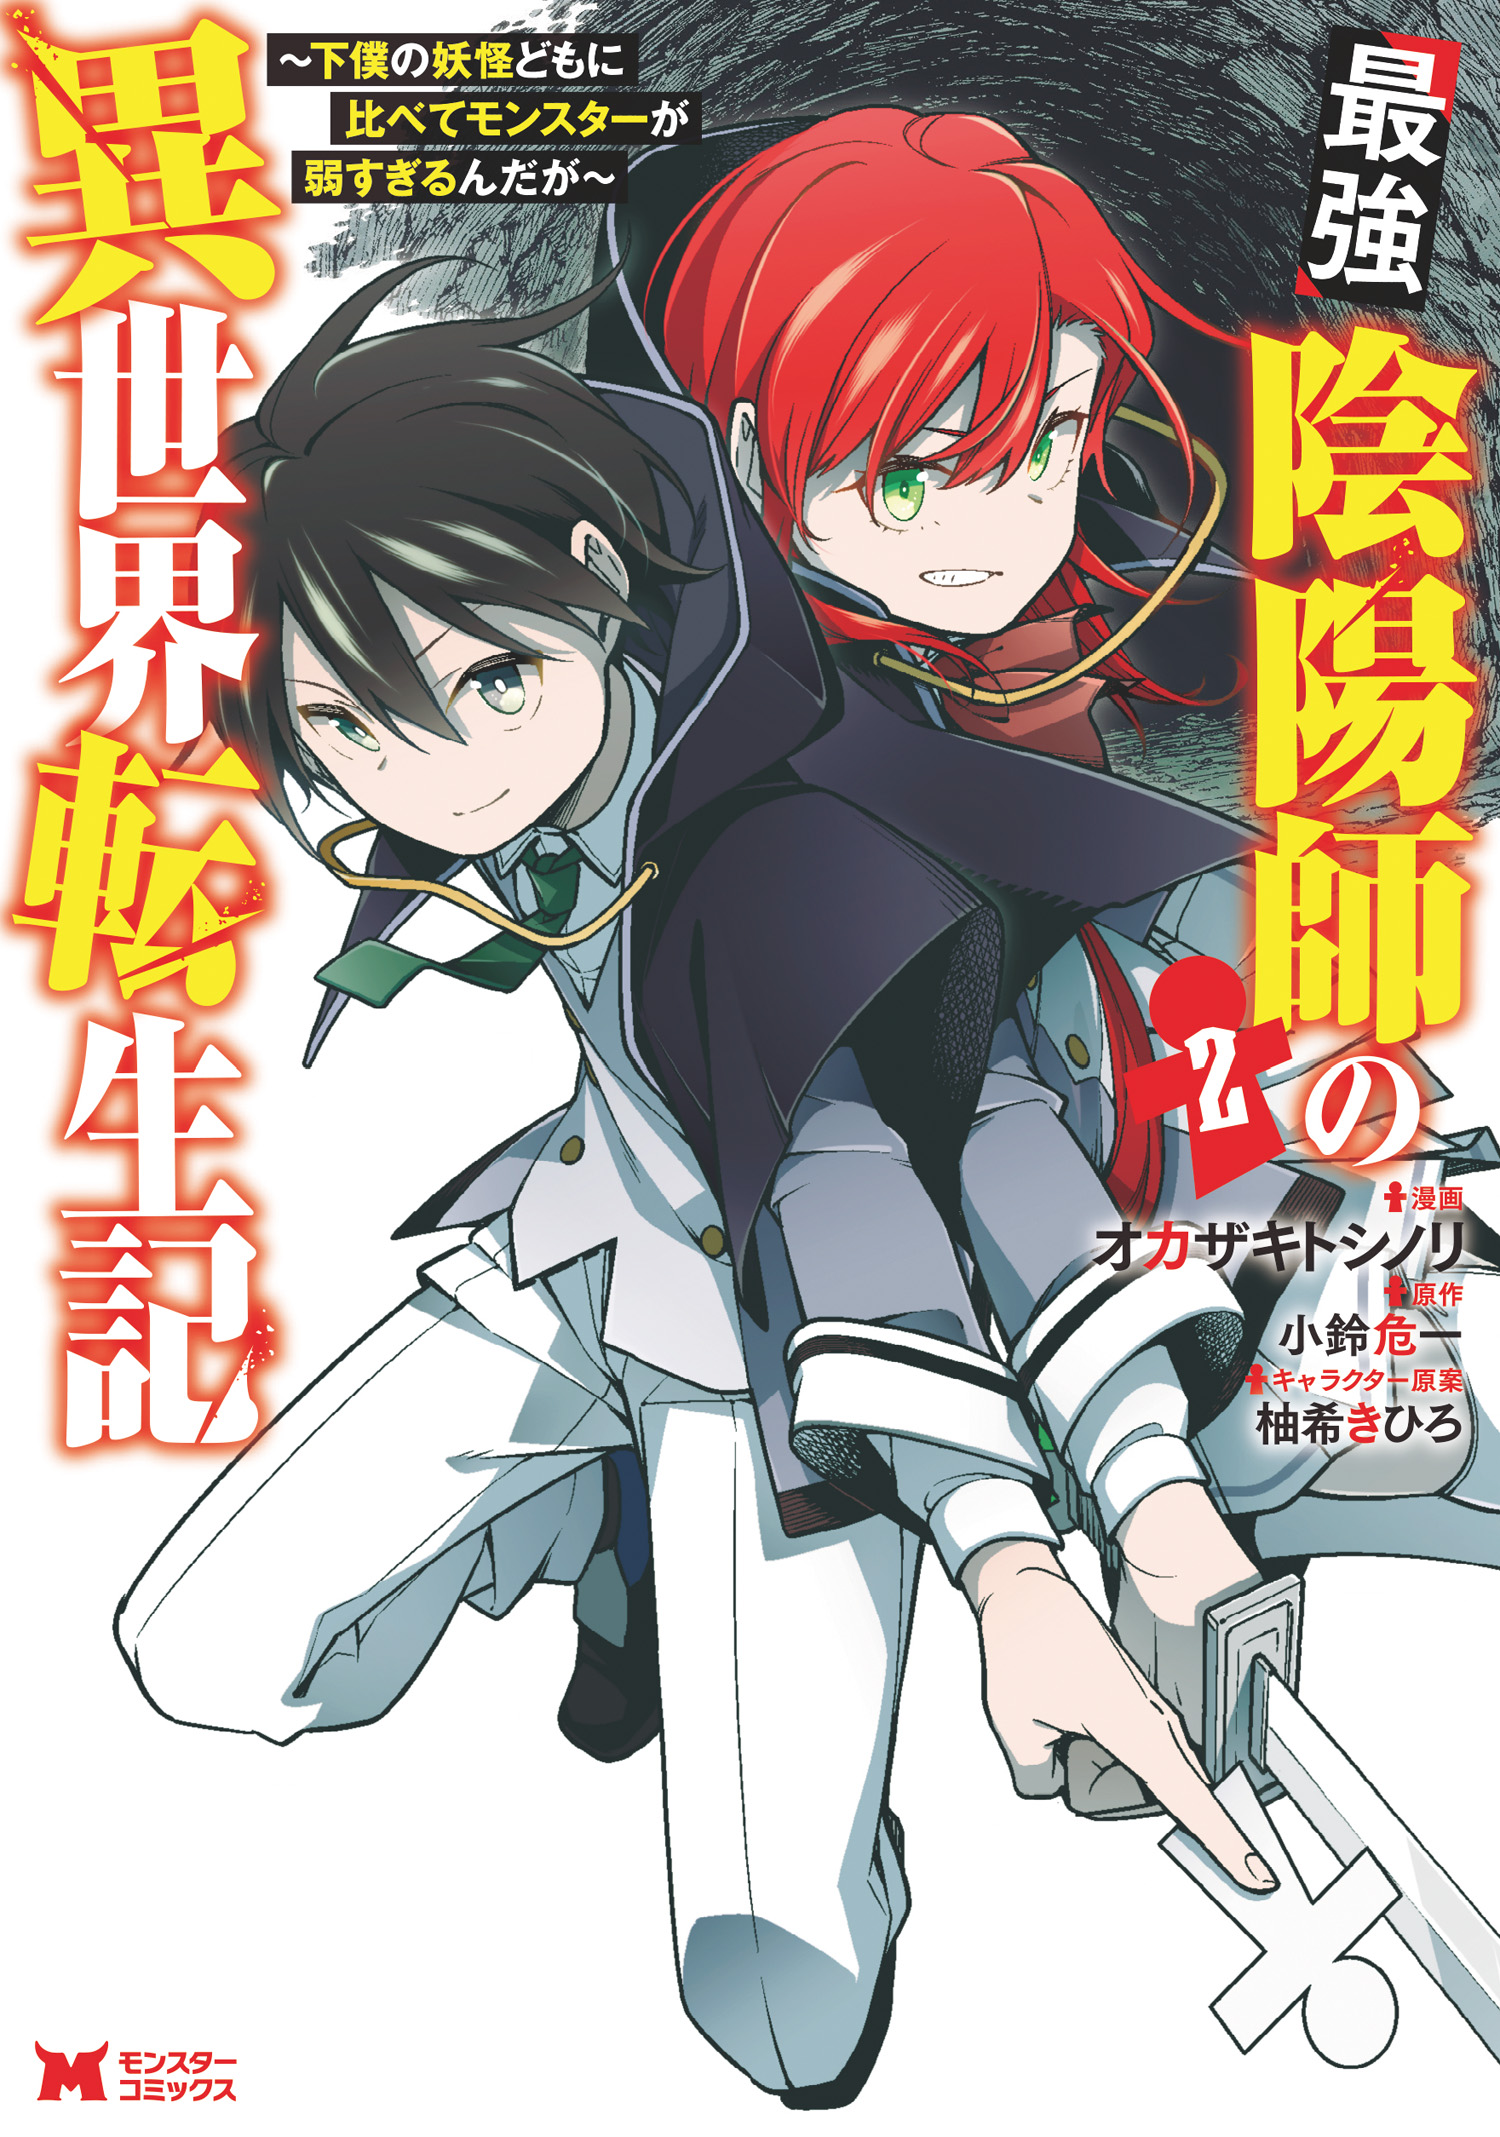 Saikyou Onmyouji no Isekai Tenseiki Light Novels Getting Anime Adaptation